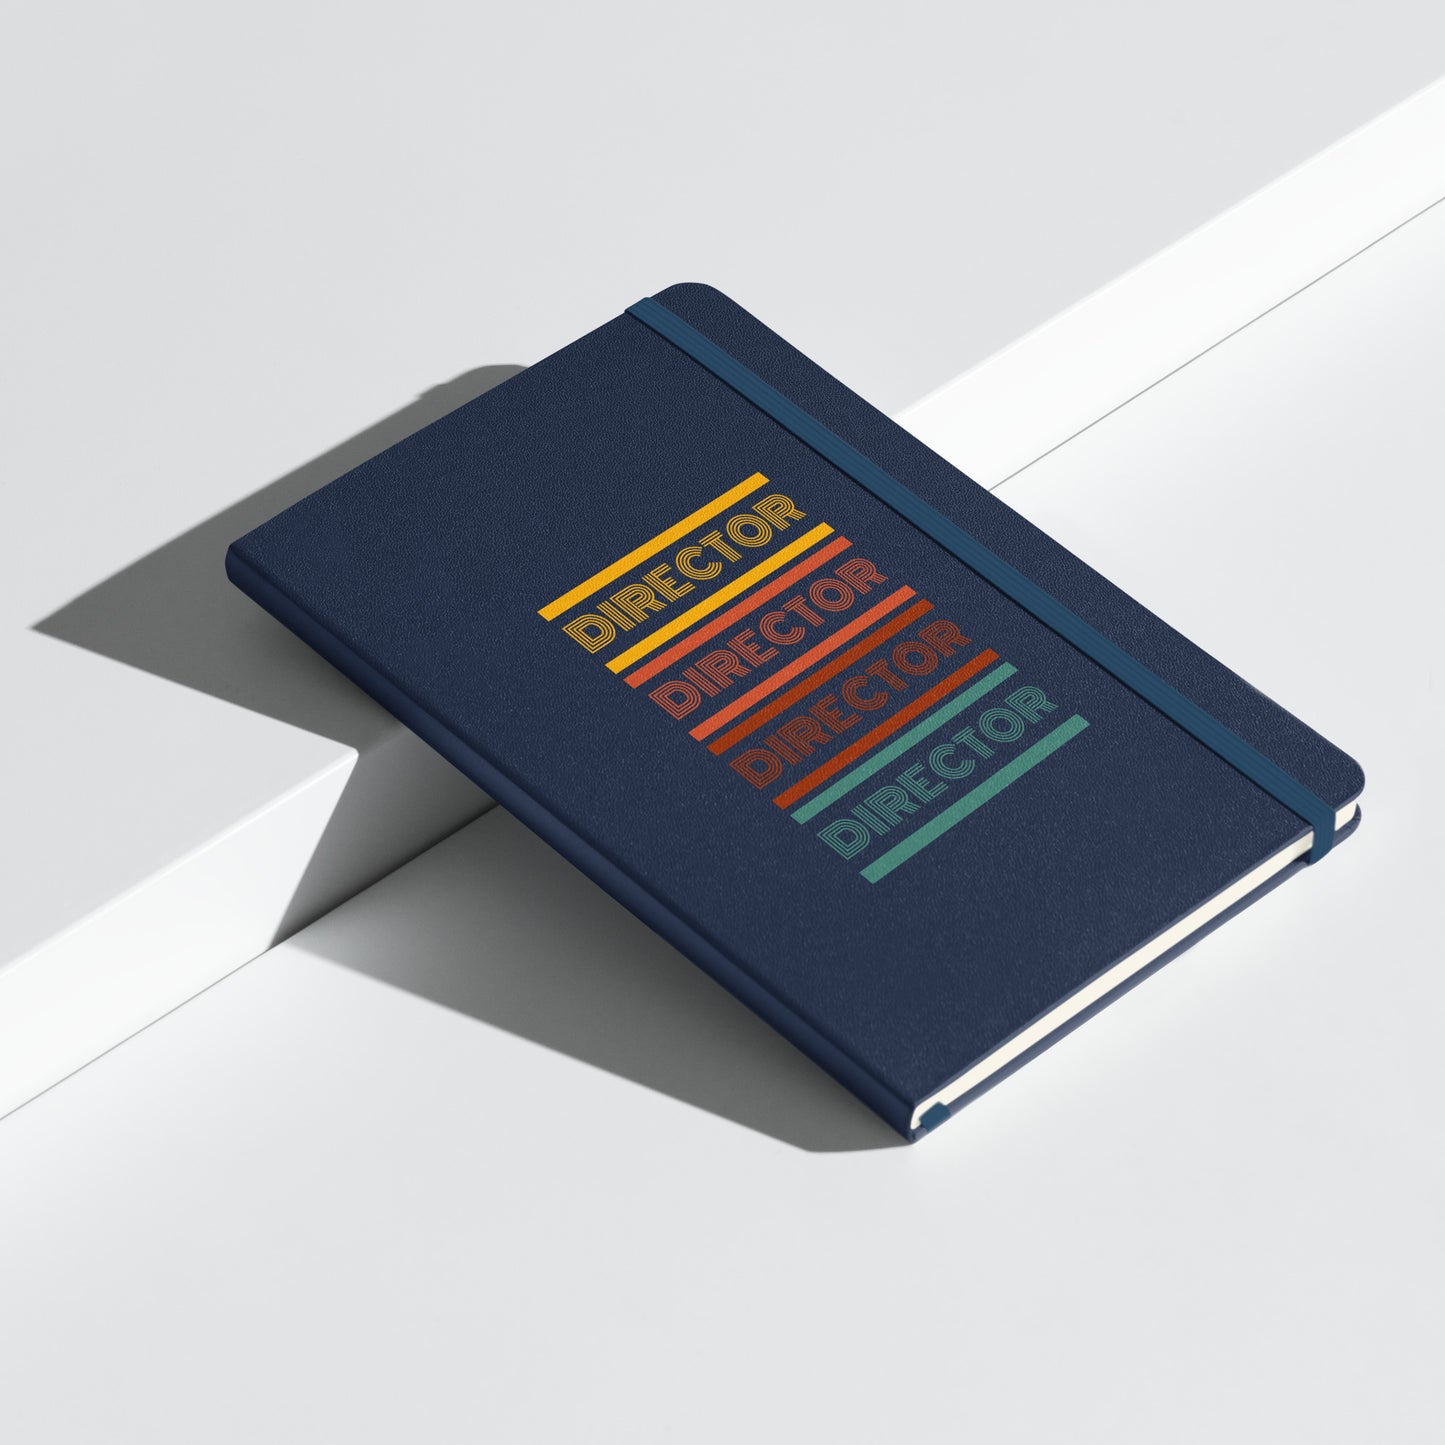 Hardcover bound notebook Director Retro Series - CineQuips